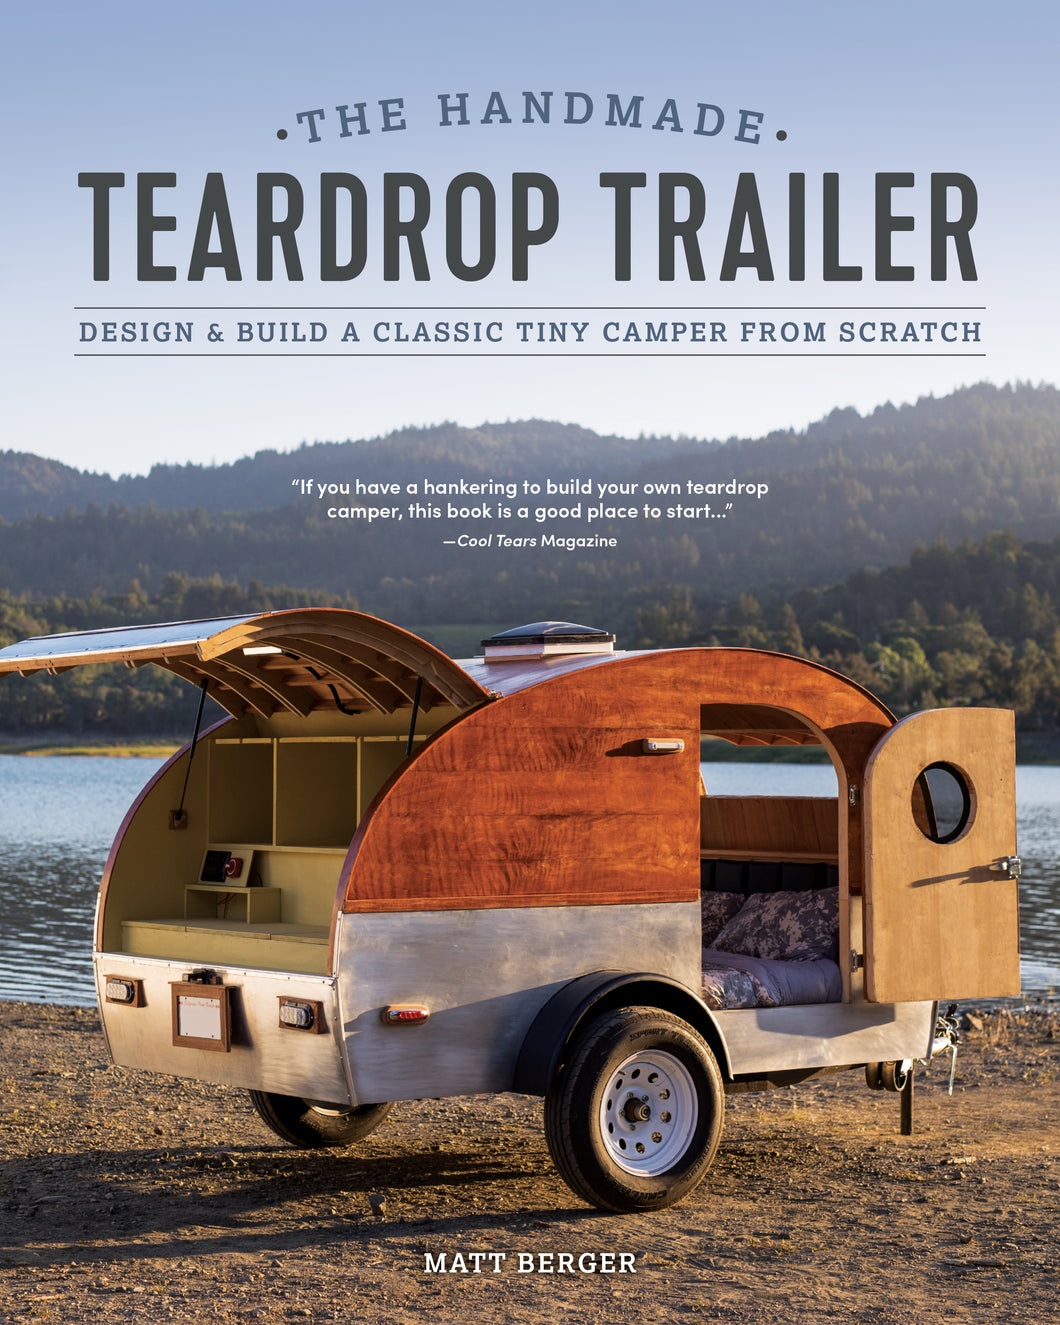 The Handmade Teardrop Trailer